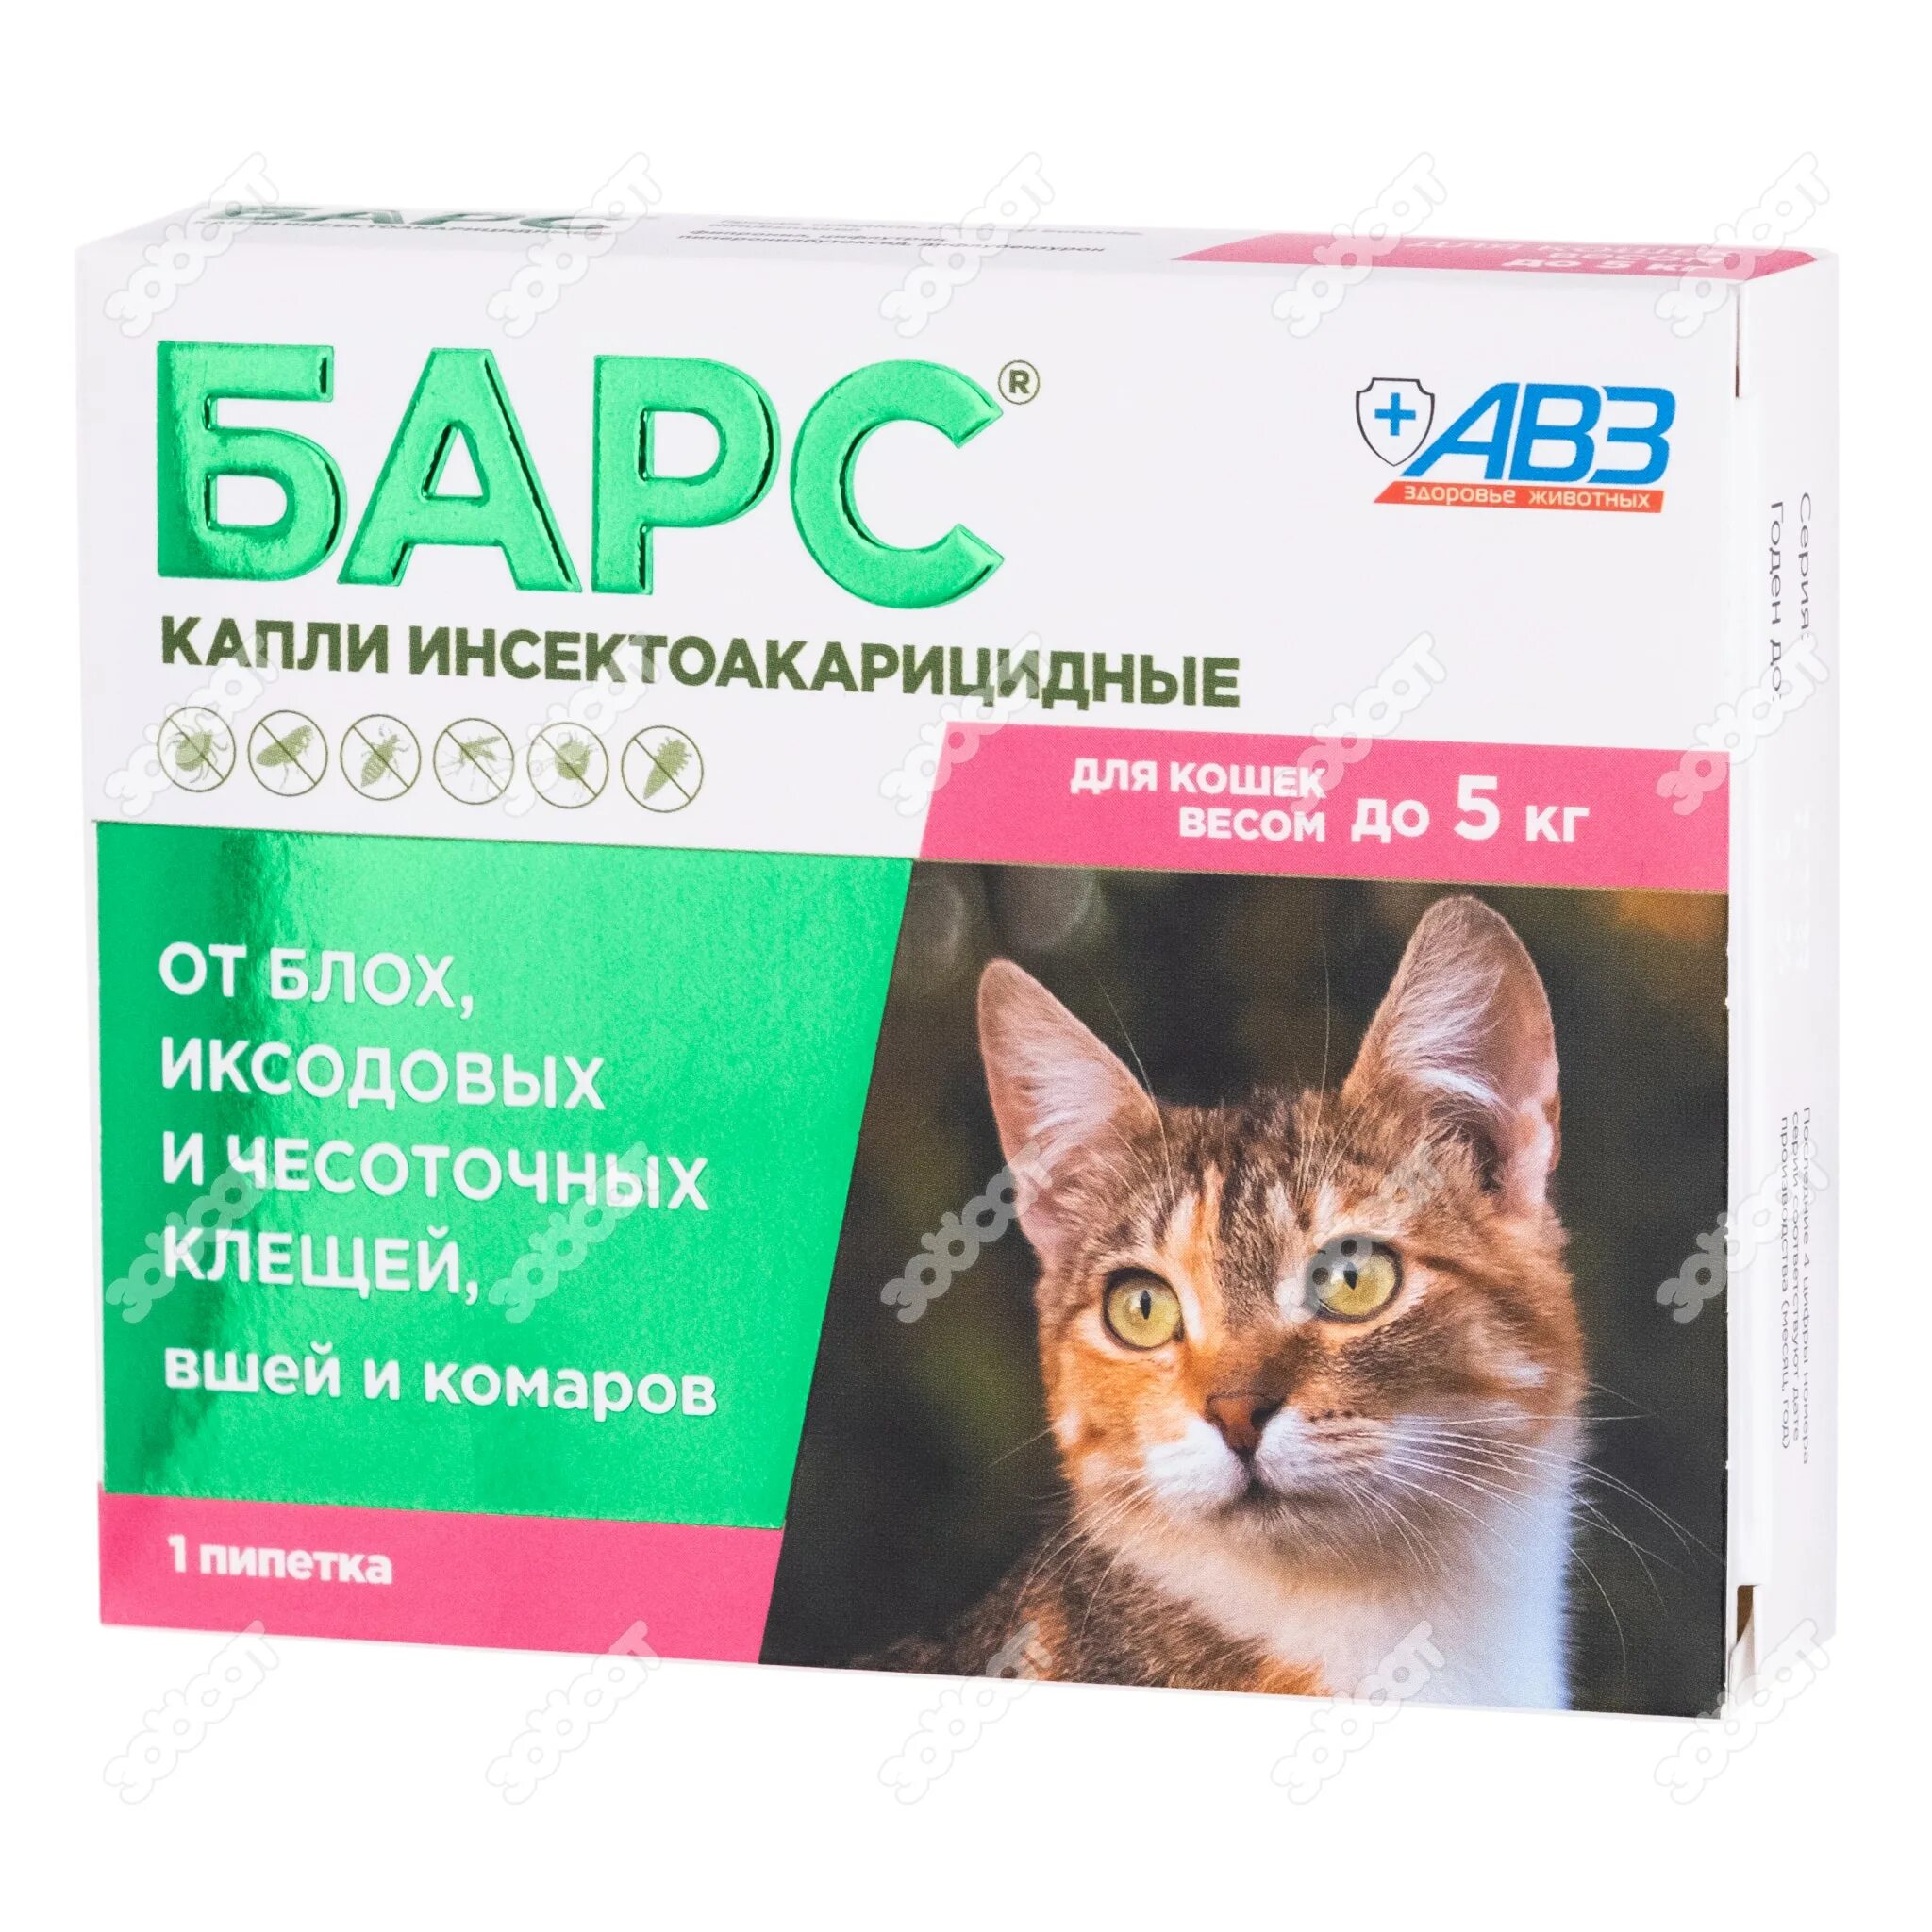 Барс классик отзывы. Барс капли инсектоакарицидные для кошек до 5 кг 1 пипетка. Капли для кошек АВЗ Барс. Барс капли инсектоакарицидные для кошек от 5 до 10кг. Капли инсектоакарицидные Барс для кошек от 2 до 5 кг.